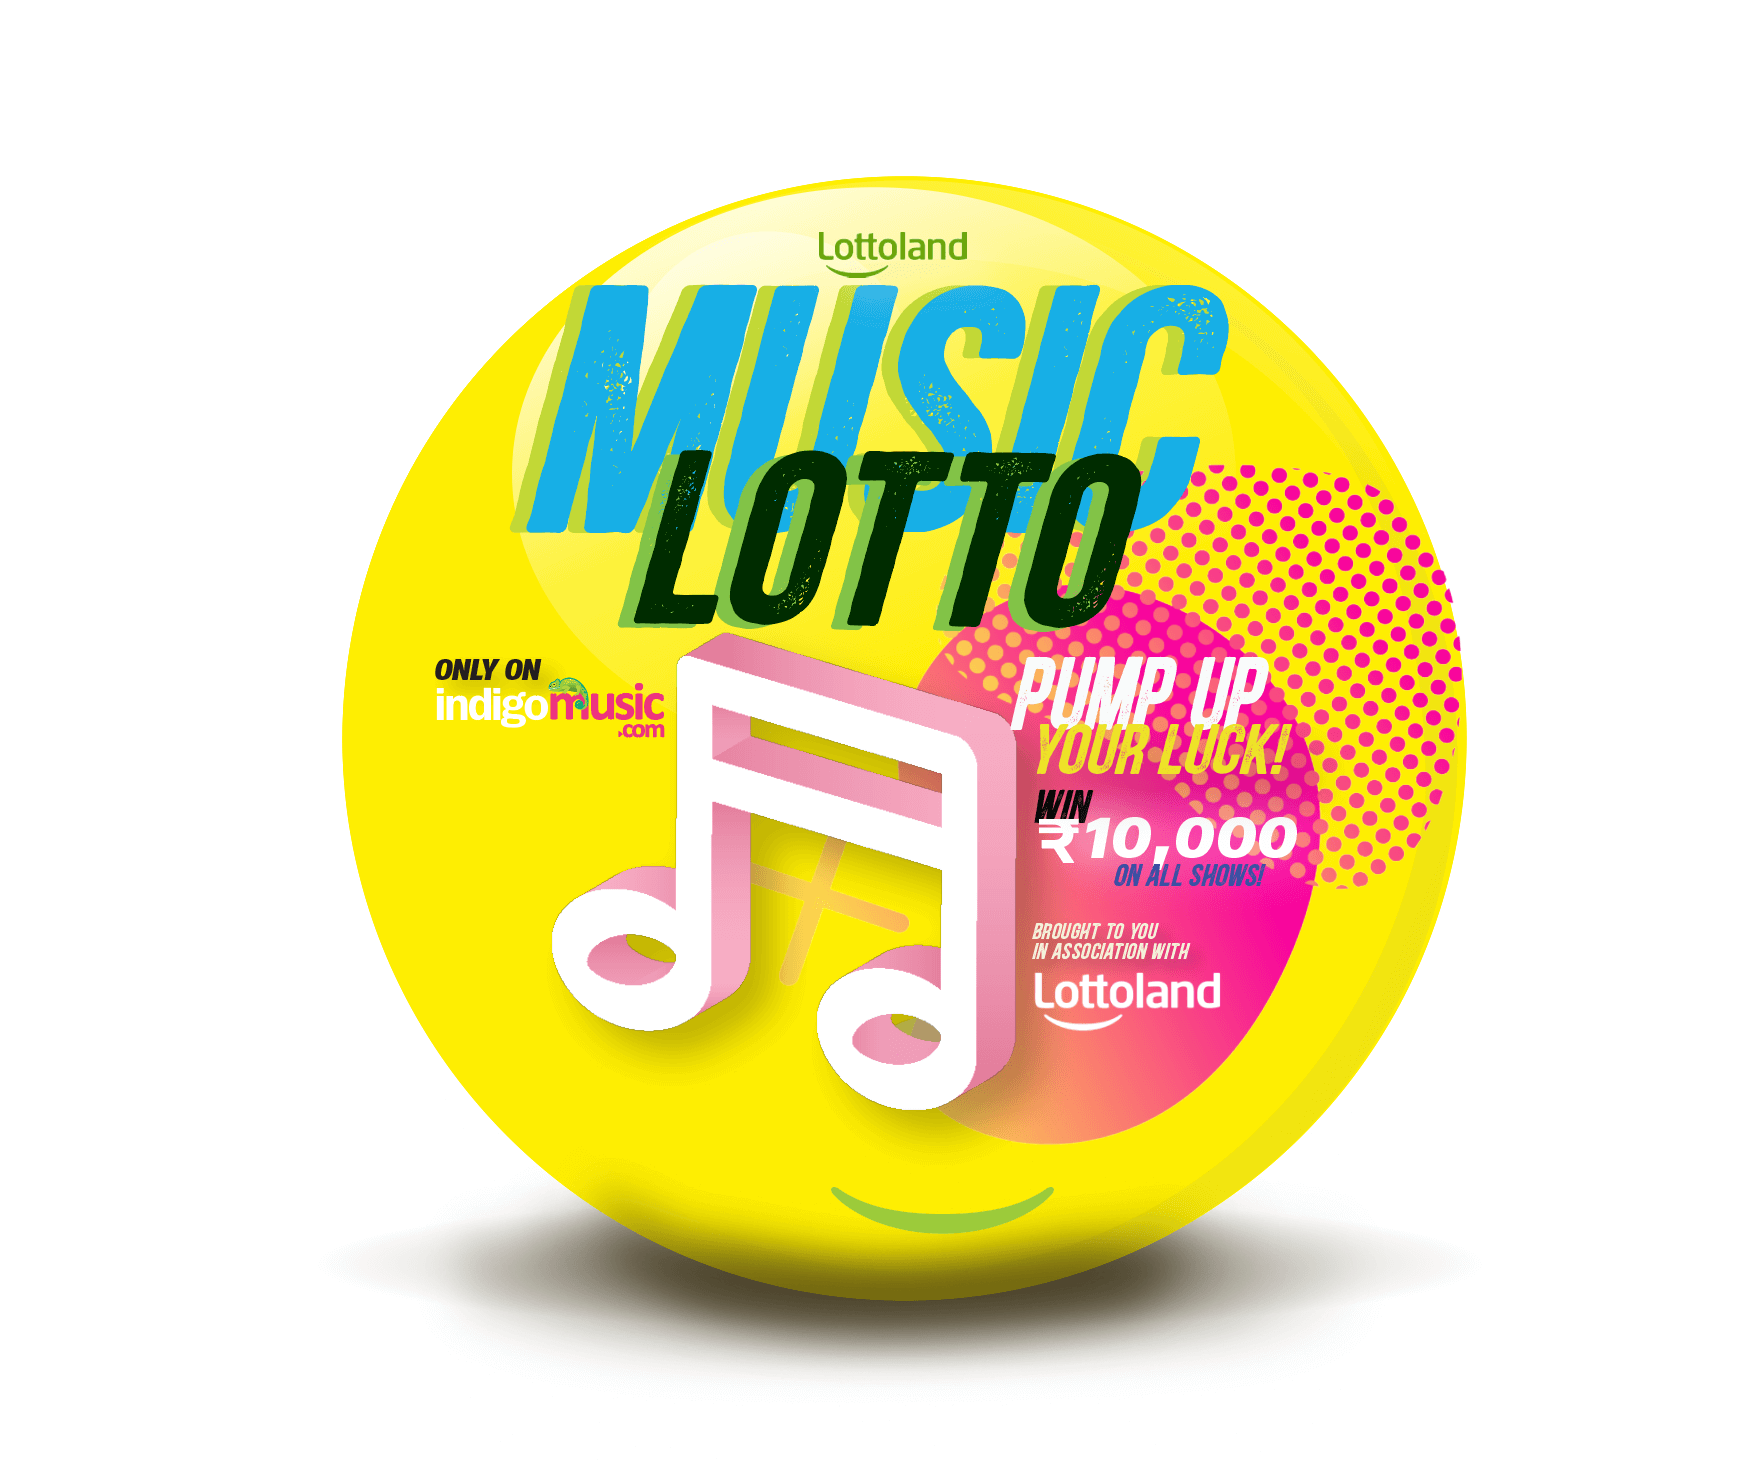 A Lottoland and Indigo Music exclusive